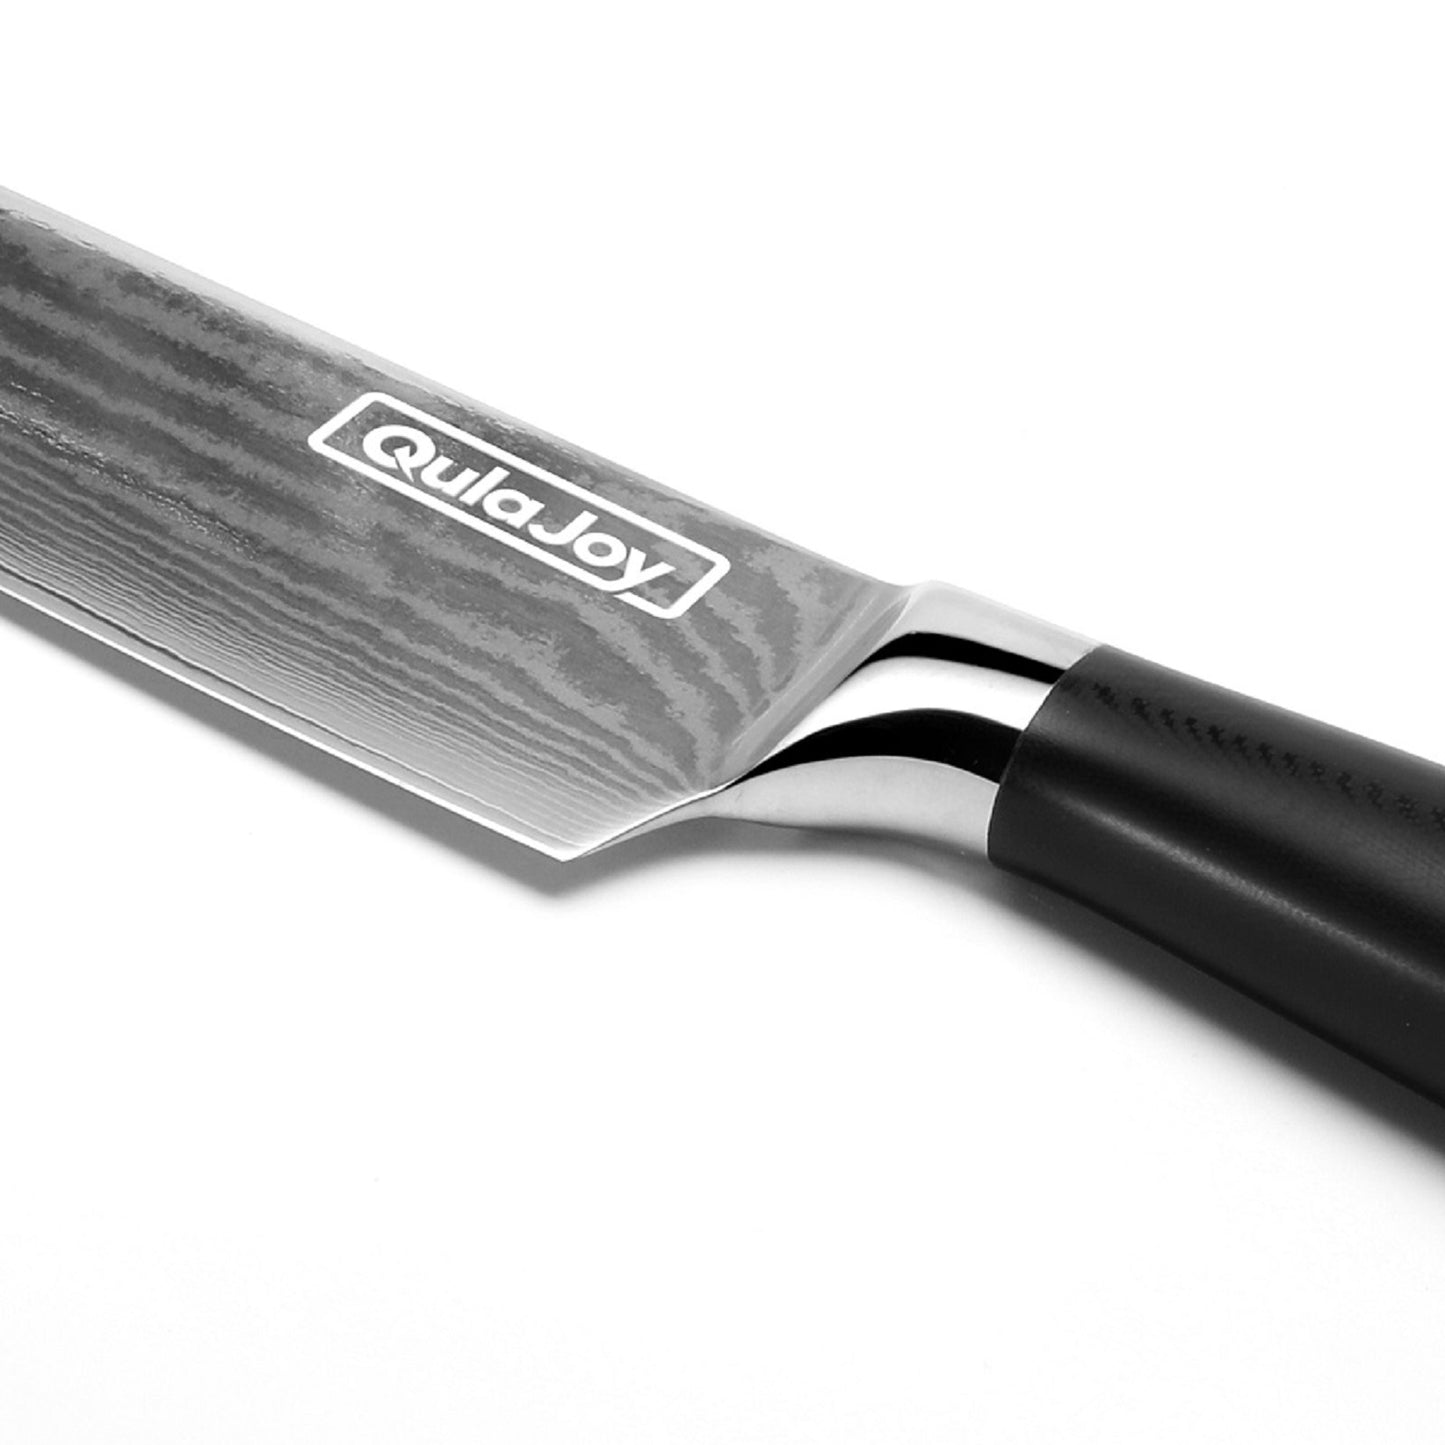 Qulajoy 8 Inch Chef Knife, Ultra Sharp Japanese Damascus VG-10 Blade,Professional Kitchen Knife With Ergonomic G10 Handle And Sheath